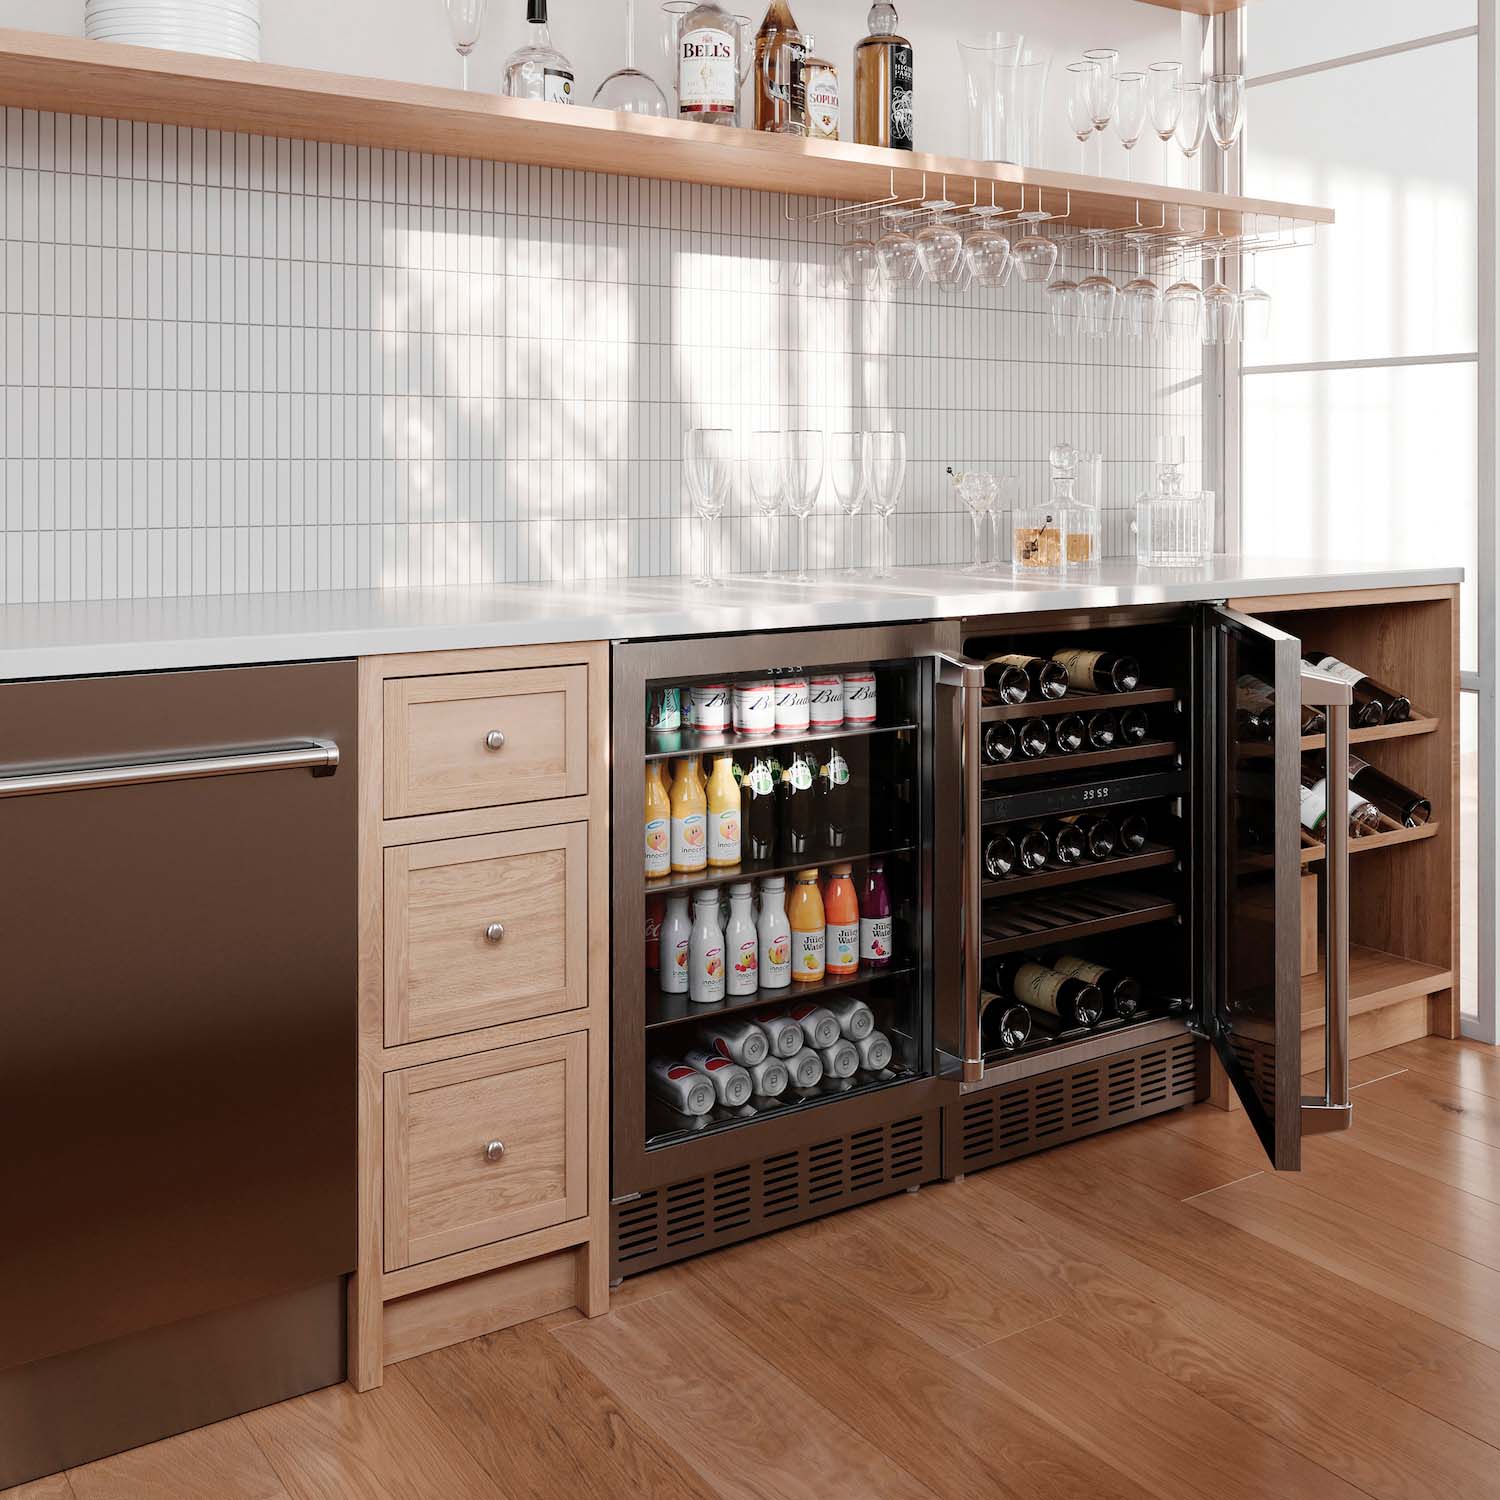 ZLINE wine cooler with door open and beverage center built-in to wood cabinets.